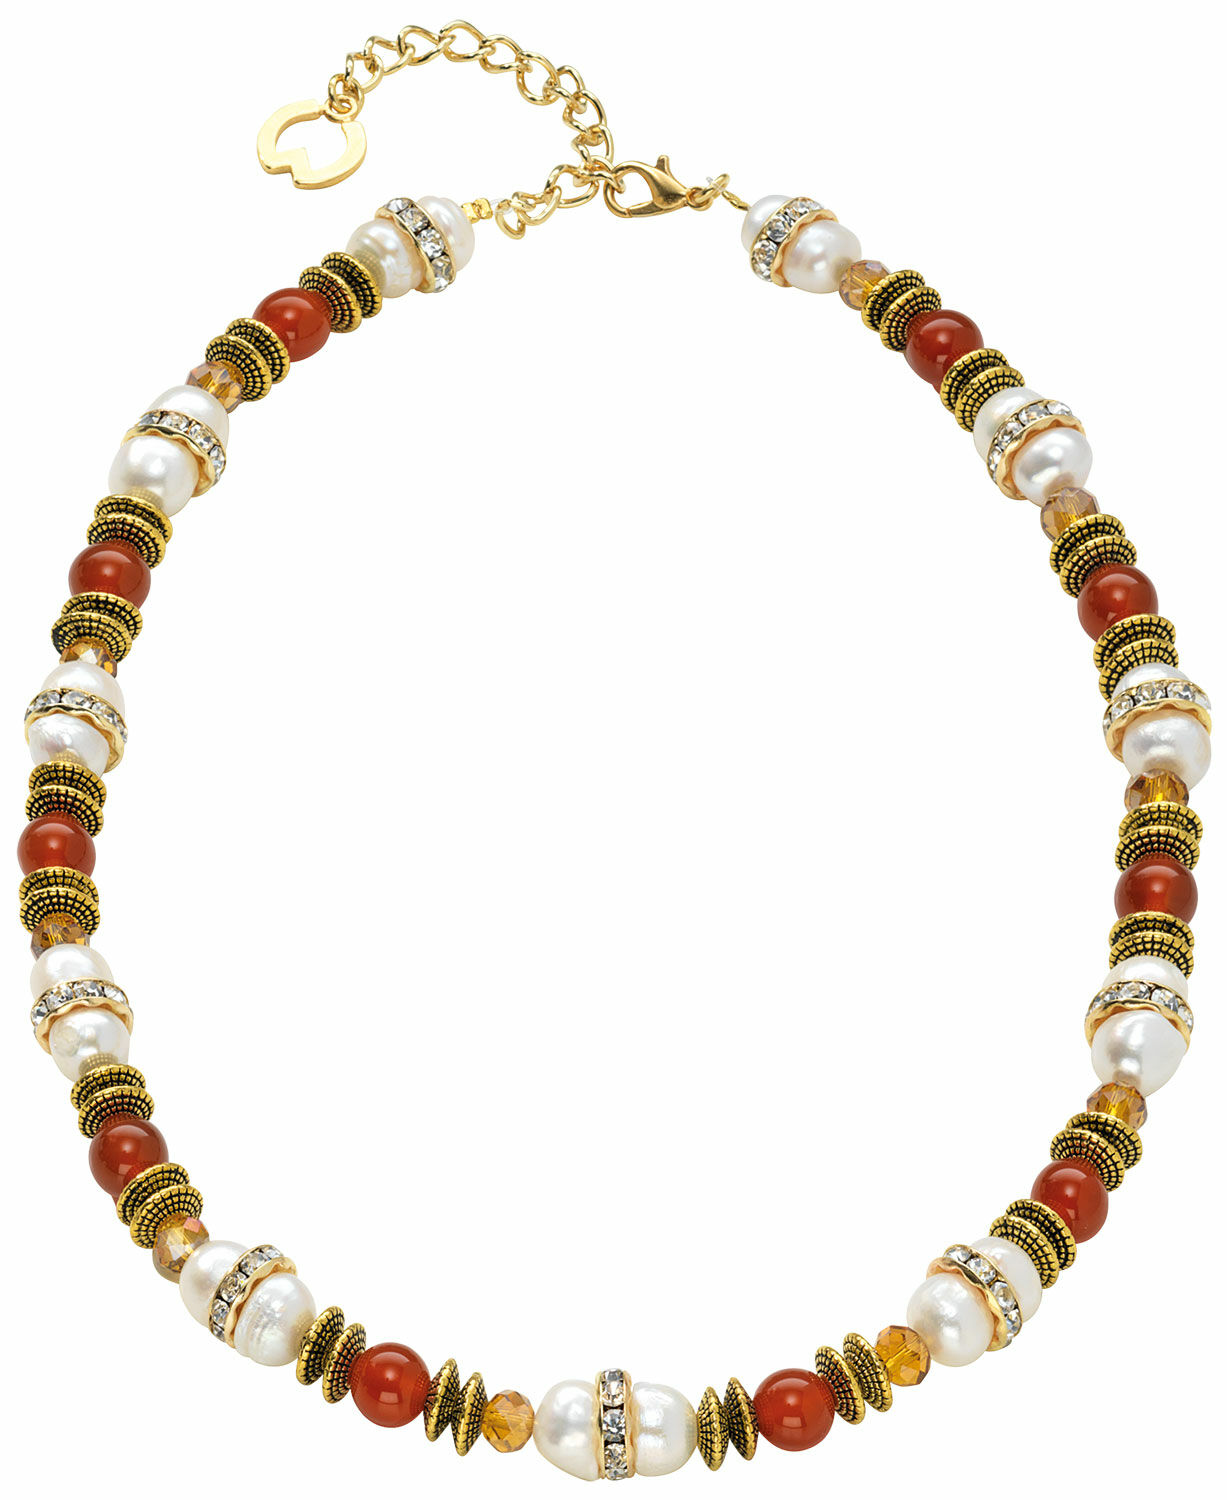 Necklace "Persephone" by Petra Waszak